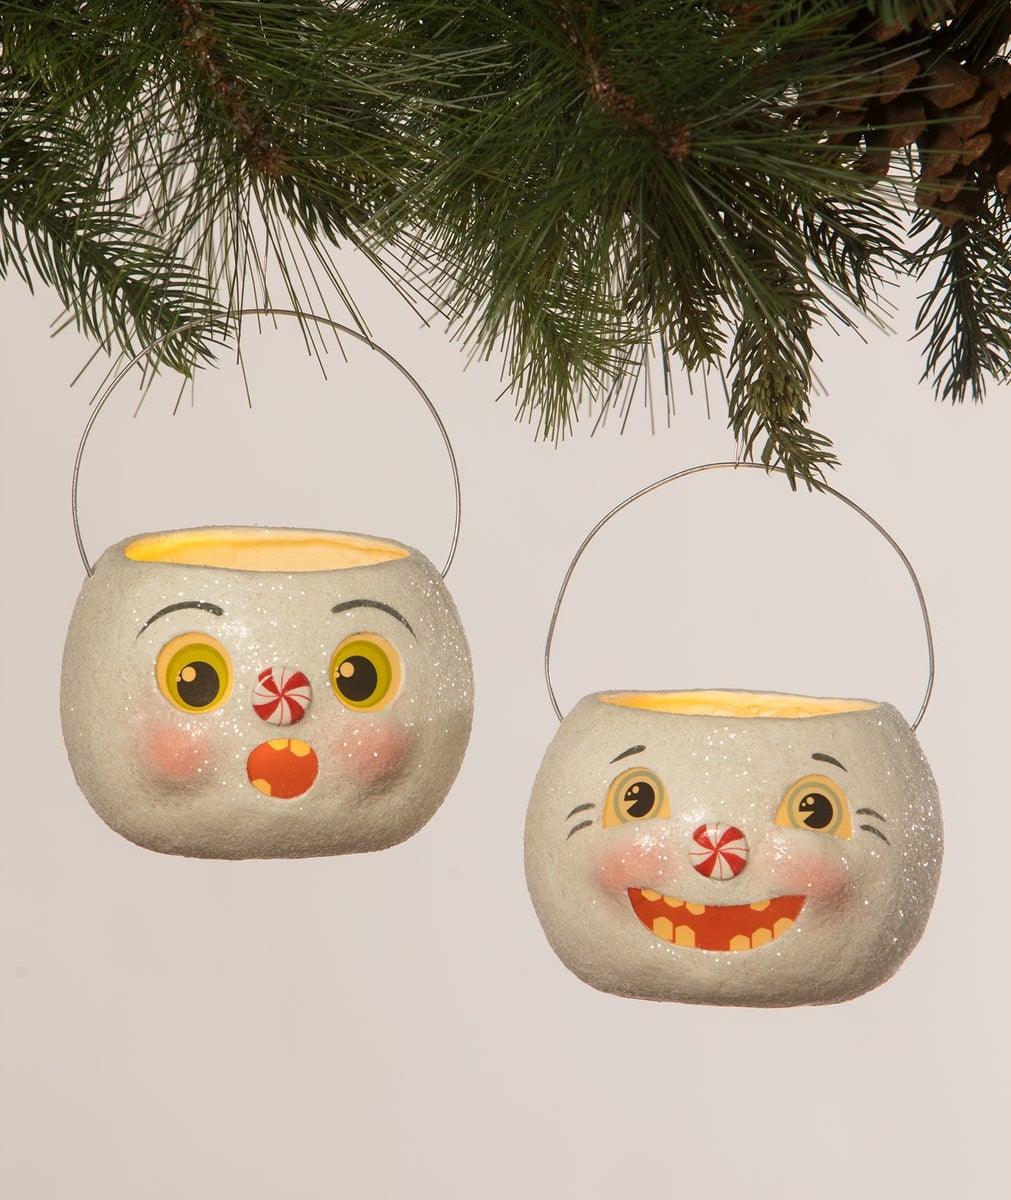  Snowman Bucket Ornaments - Cute Christmas Decorating Ideas